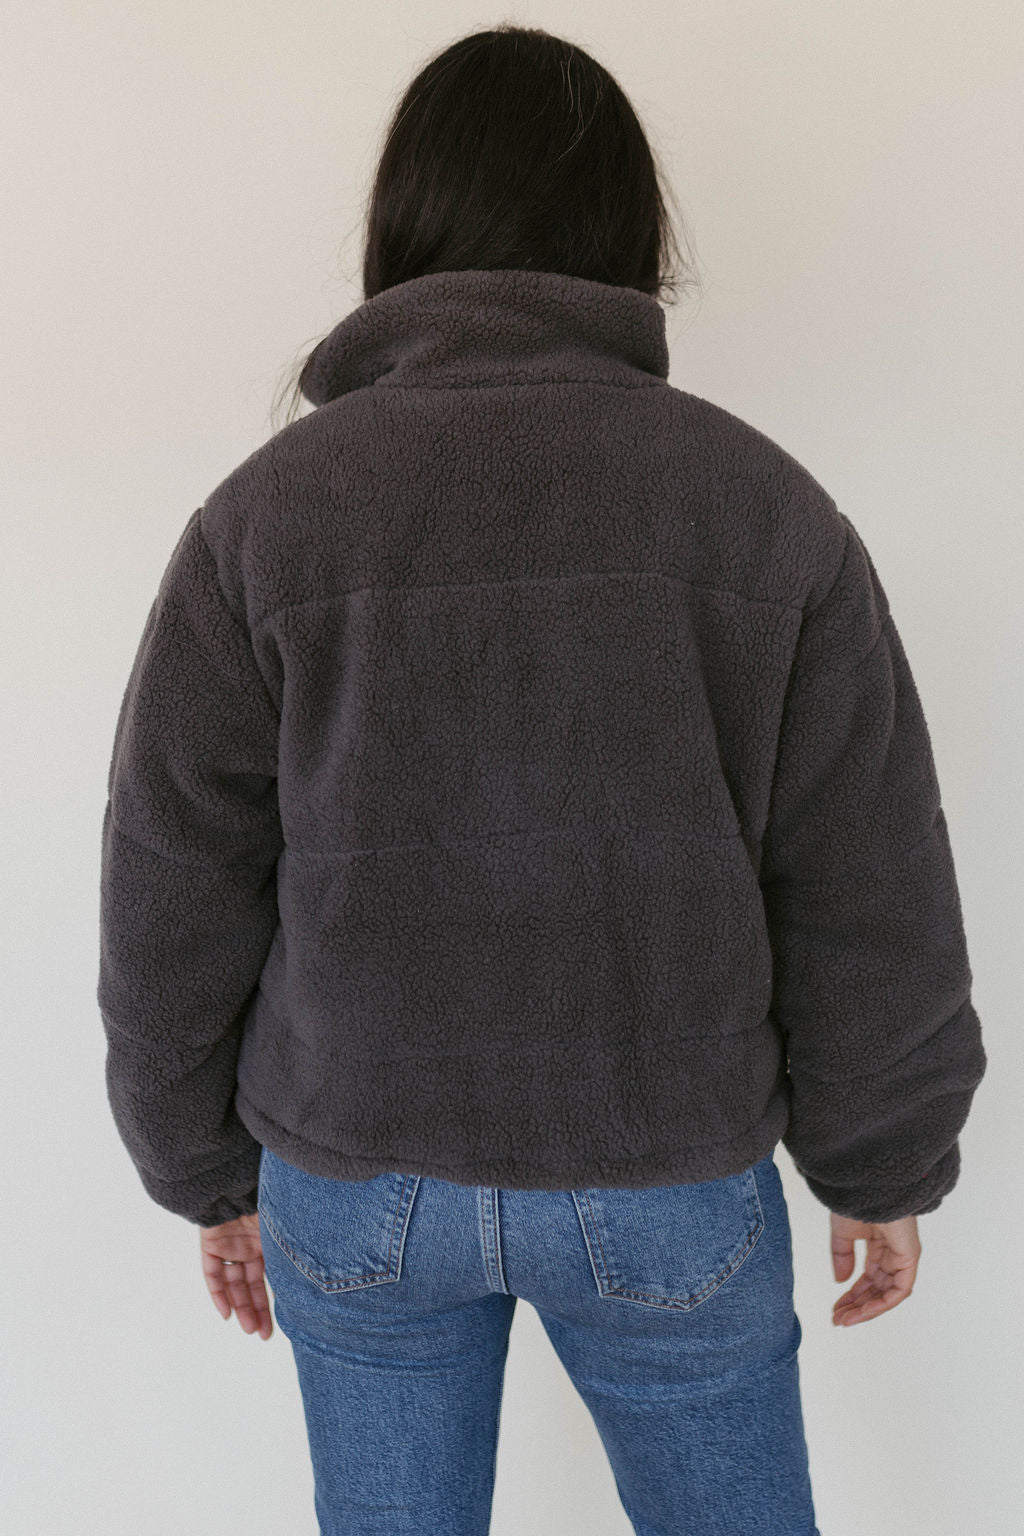 sherpa jacket with pockets